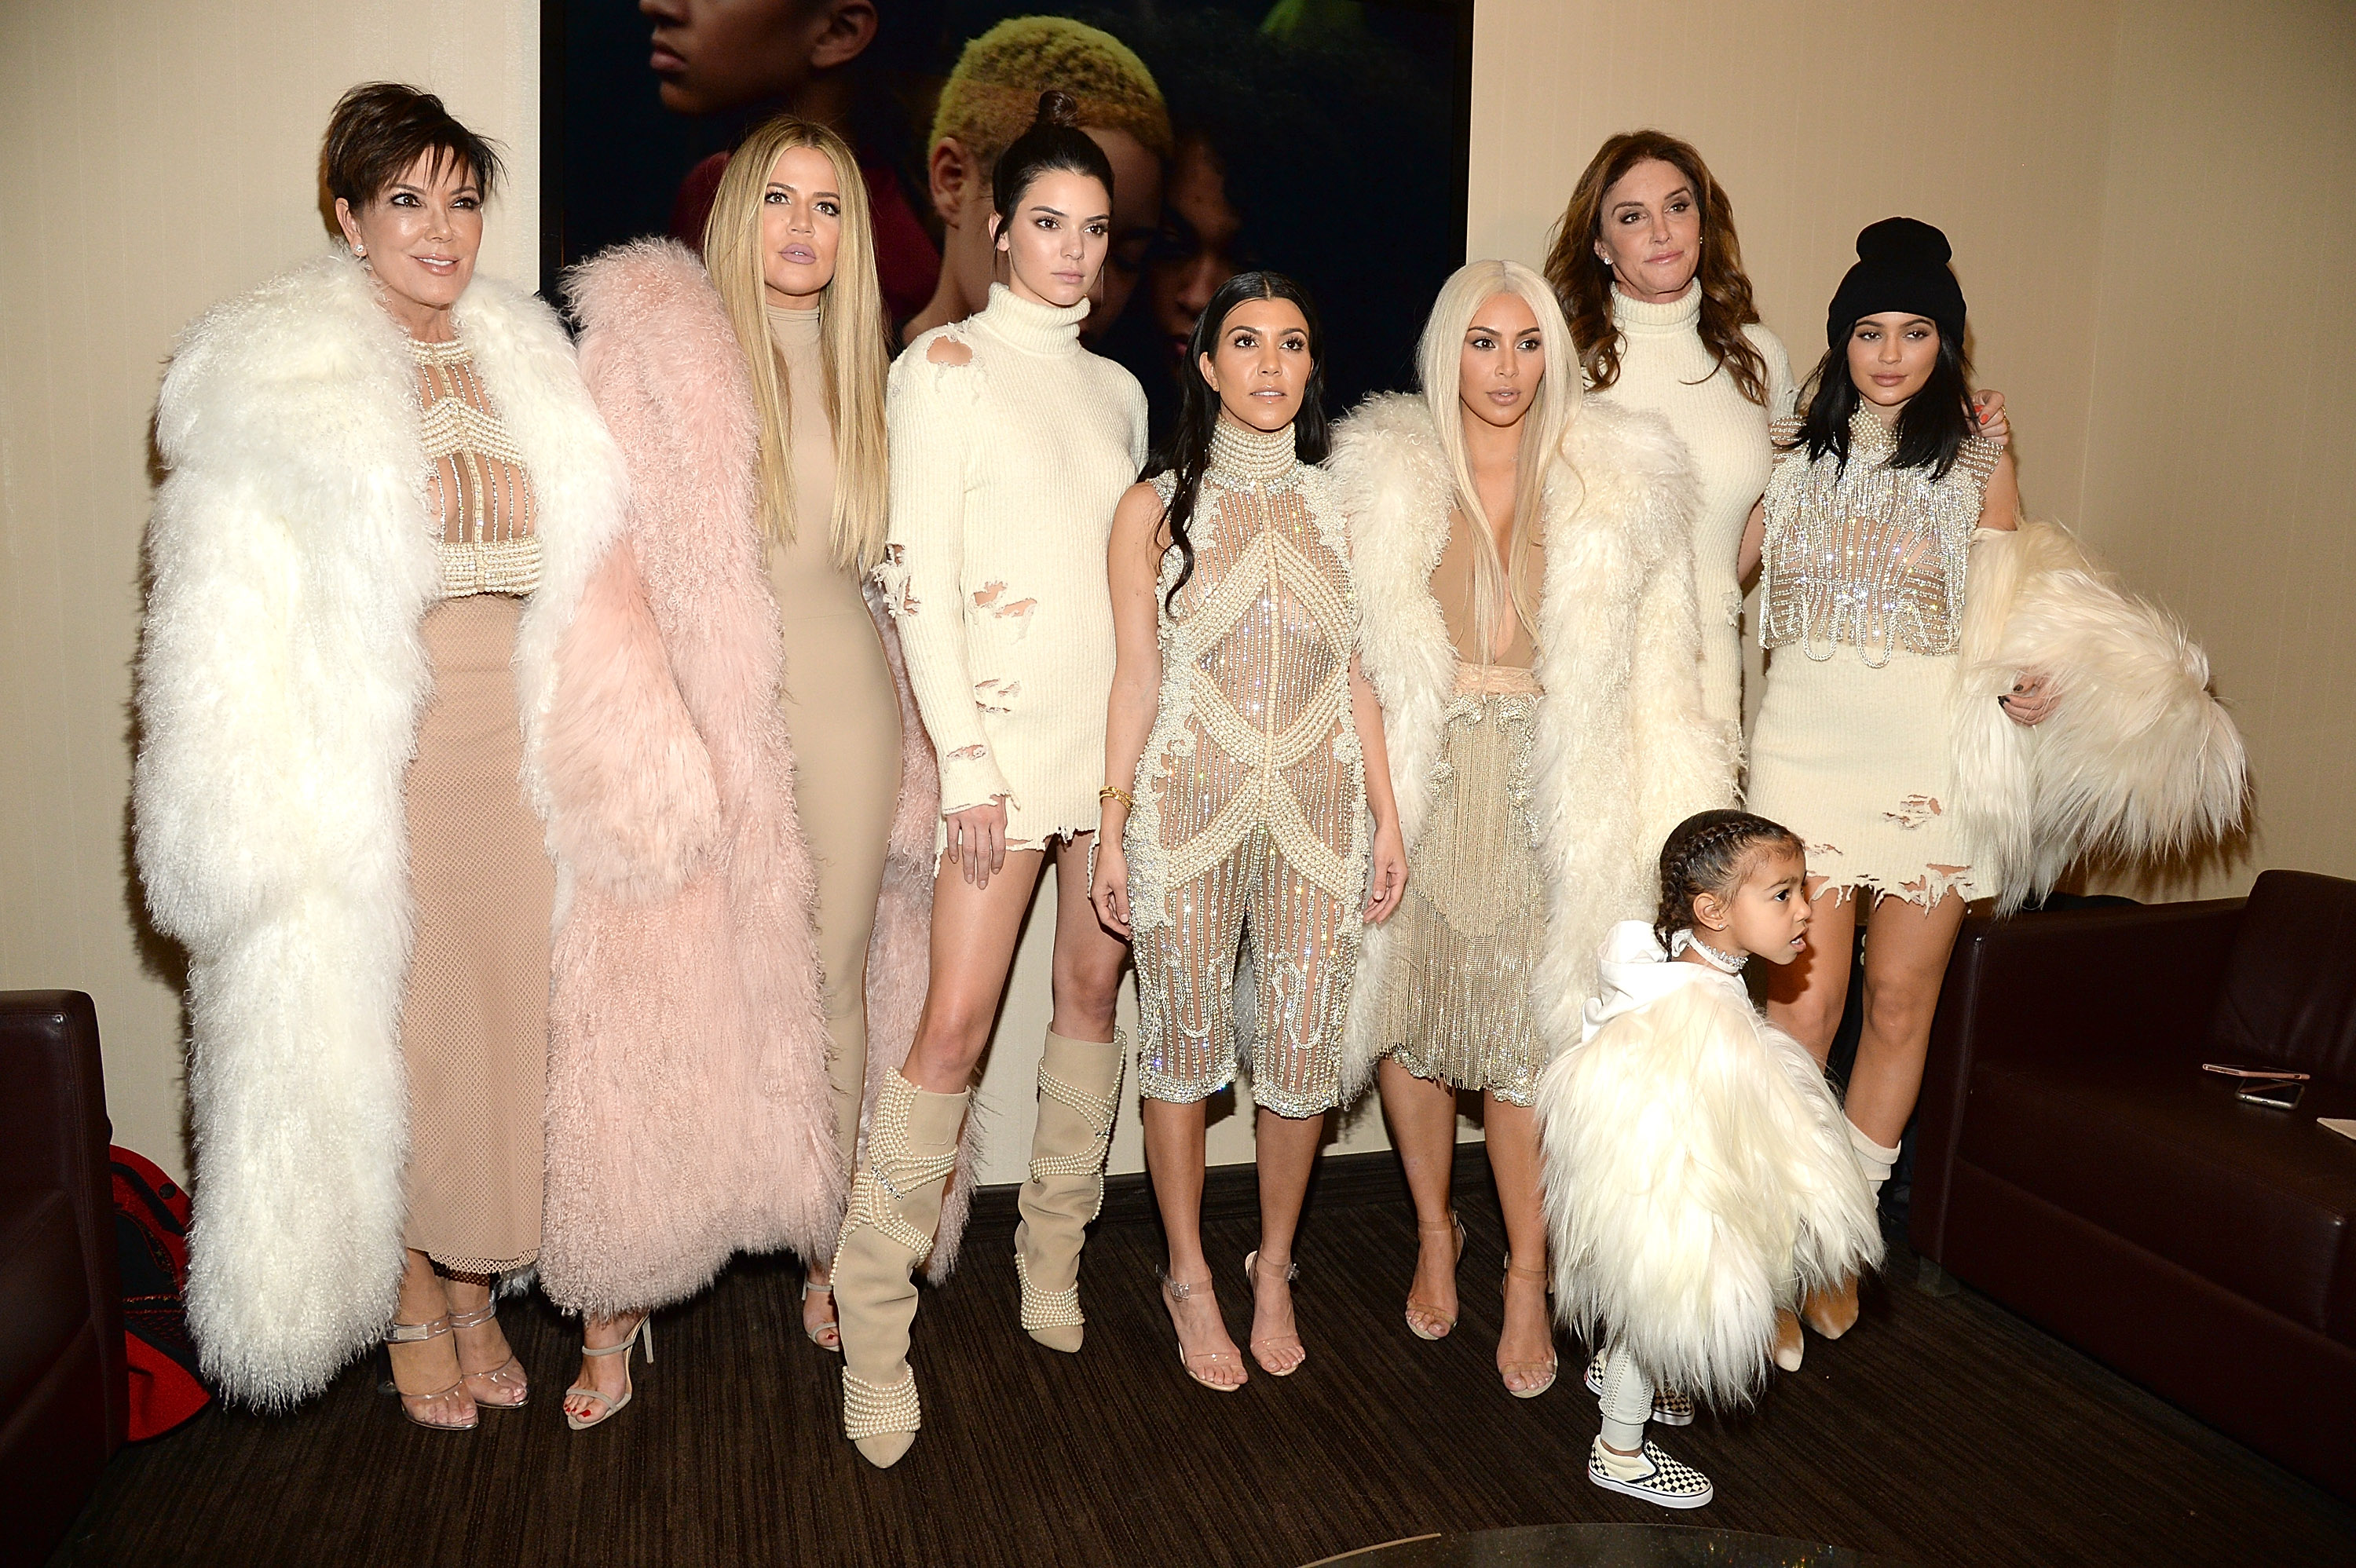 Kris Jenner with kids Khloe Kardashian, Kendall Jenner, Kourtney Kardashian, Kim Kardashian West, North West, Caitlyn Jenner, and Kylie Jenner